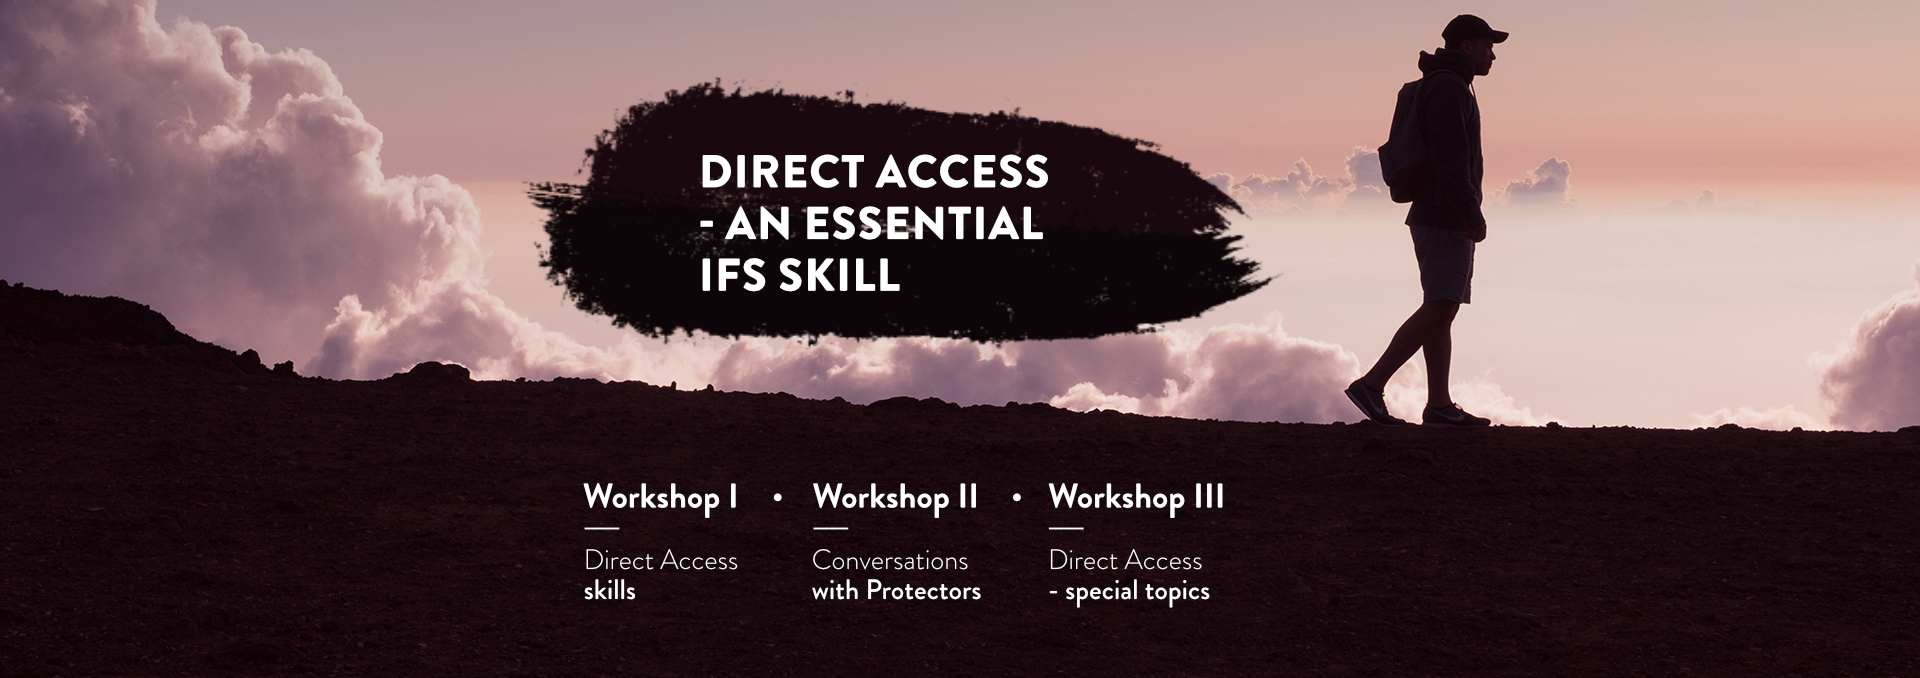 Direct Access - An Essential IFS Skill LP 10